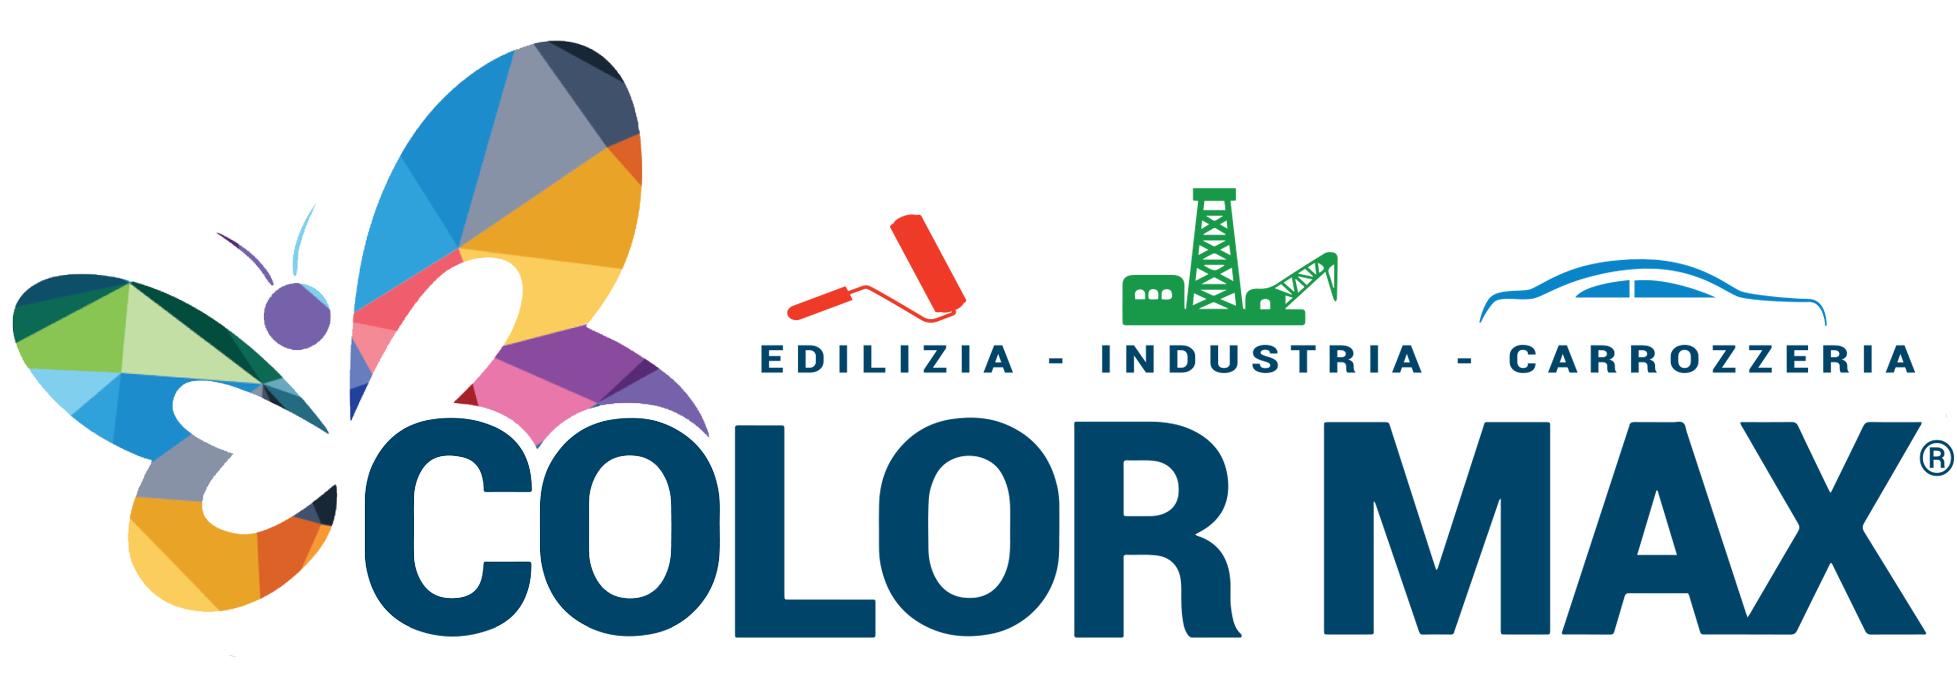 Color Max - Edilizia, Industria, Carrozzeria